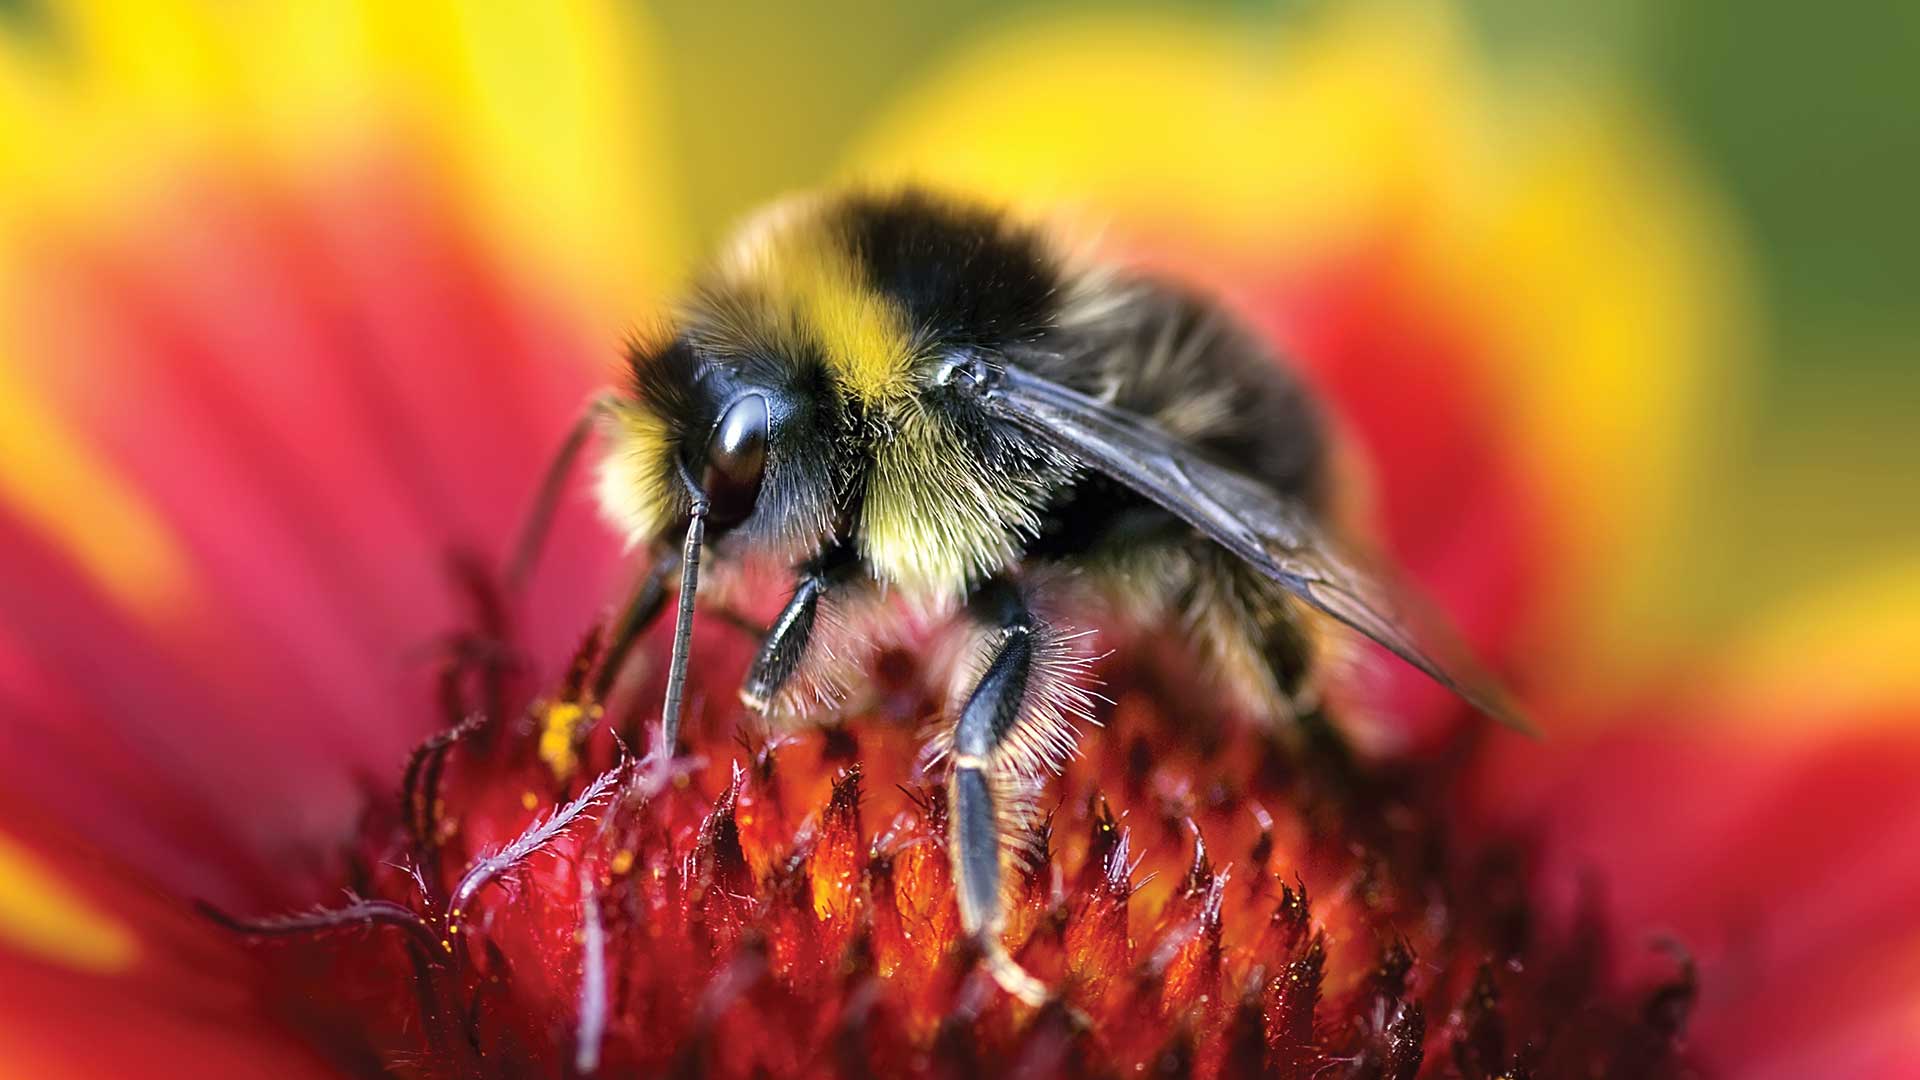 Little bumble bee landing on flower